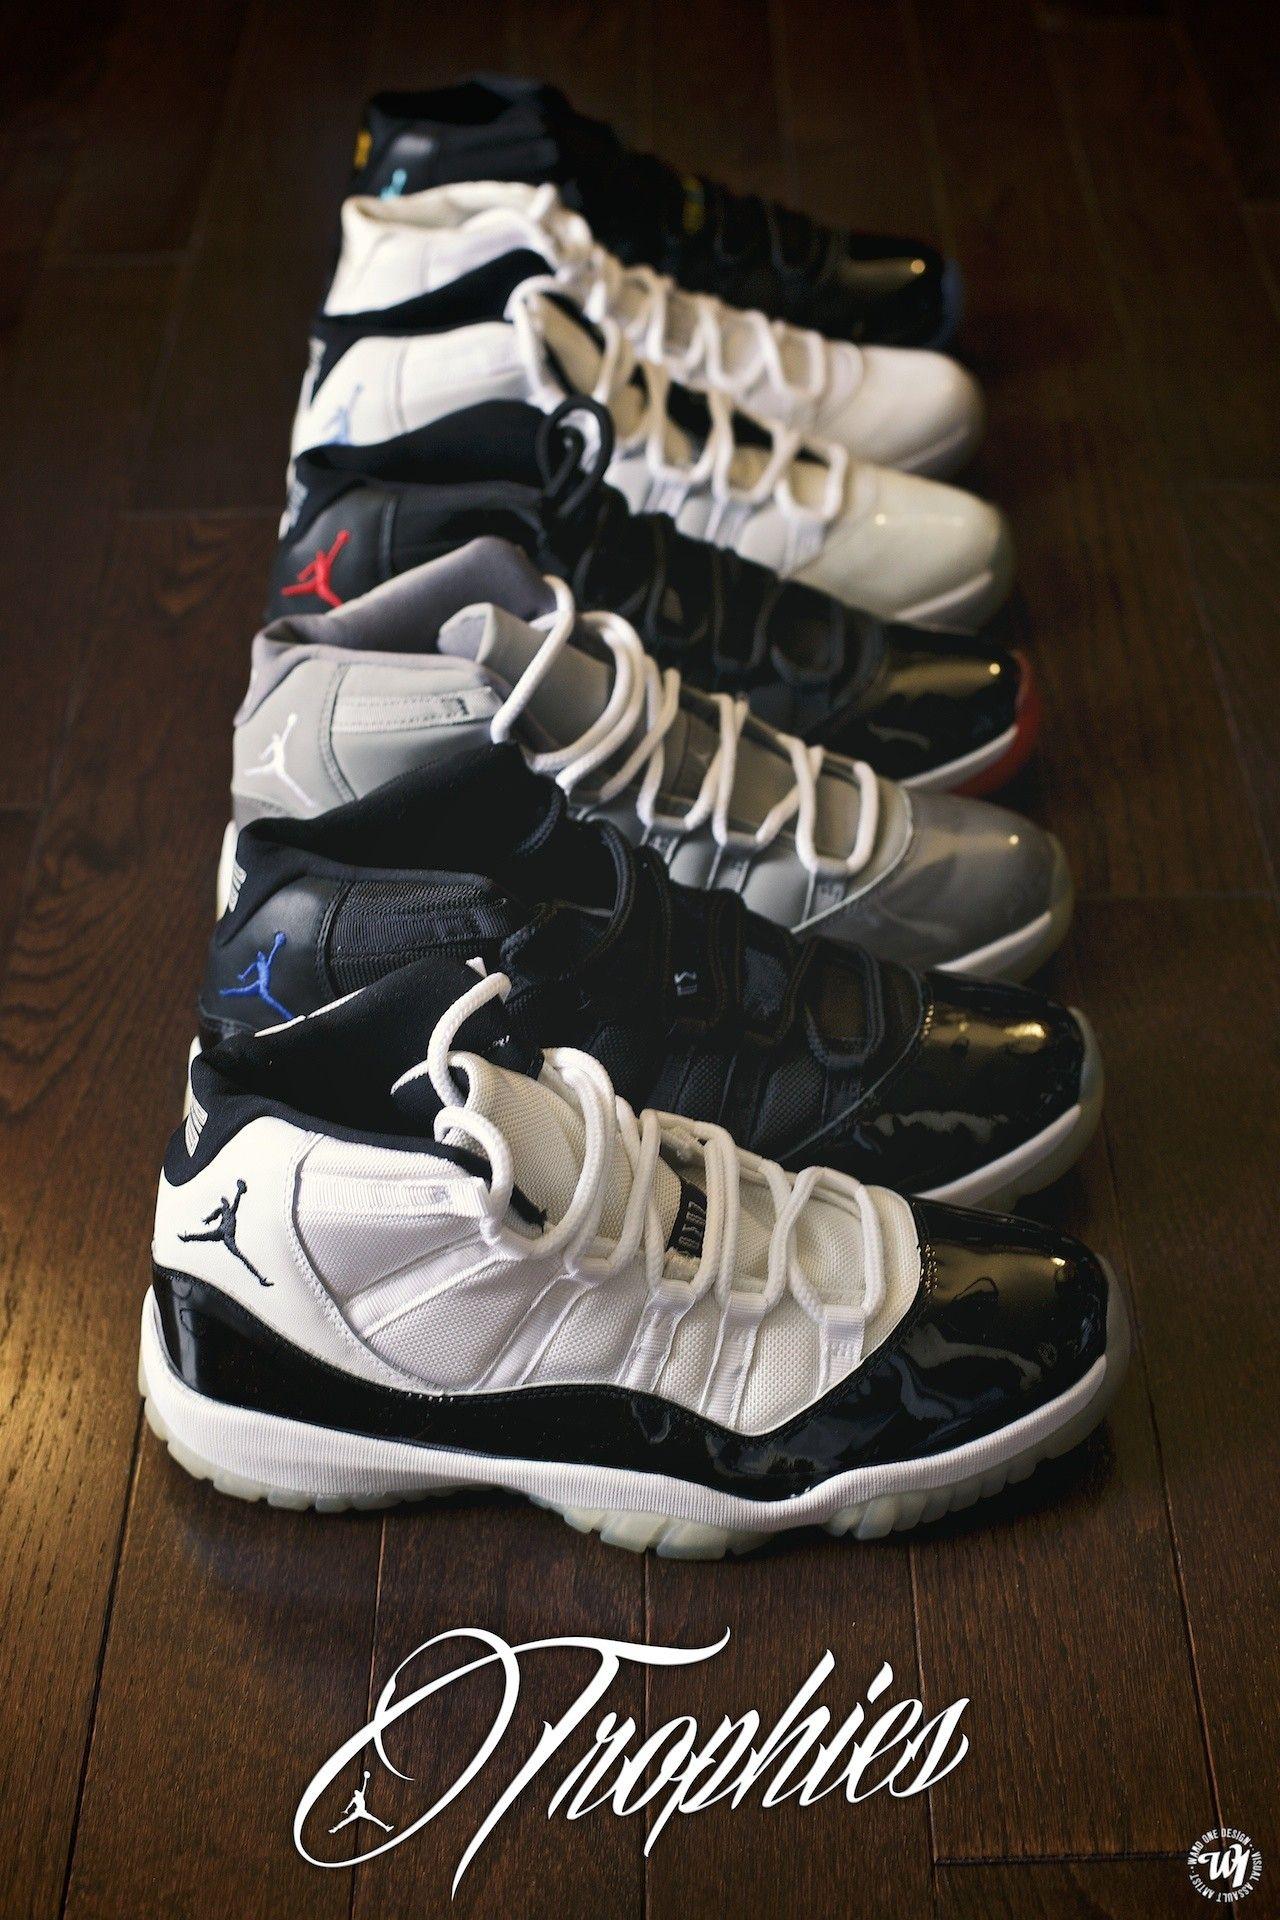 Jordan Retro Wallpaper. Jordan shoes